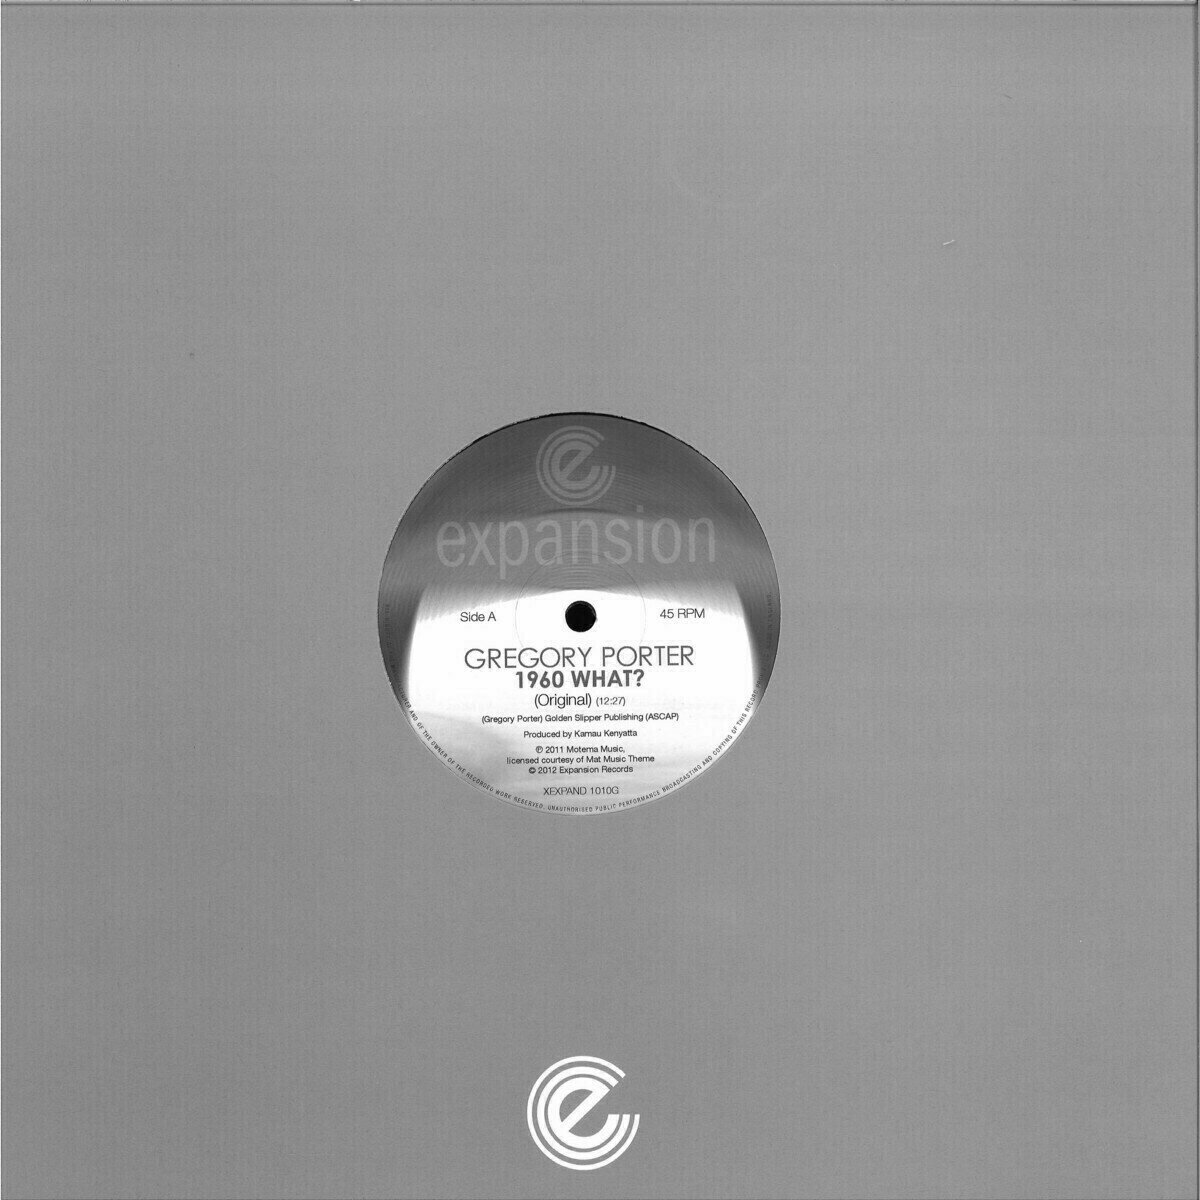 Disc de vinil Gregory Porter - 1960 What? (Original Mix) (12" Vinyl)